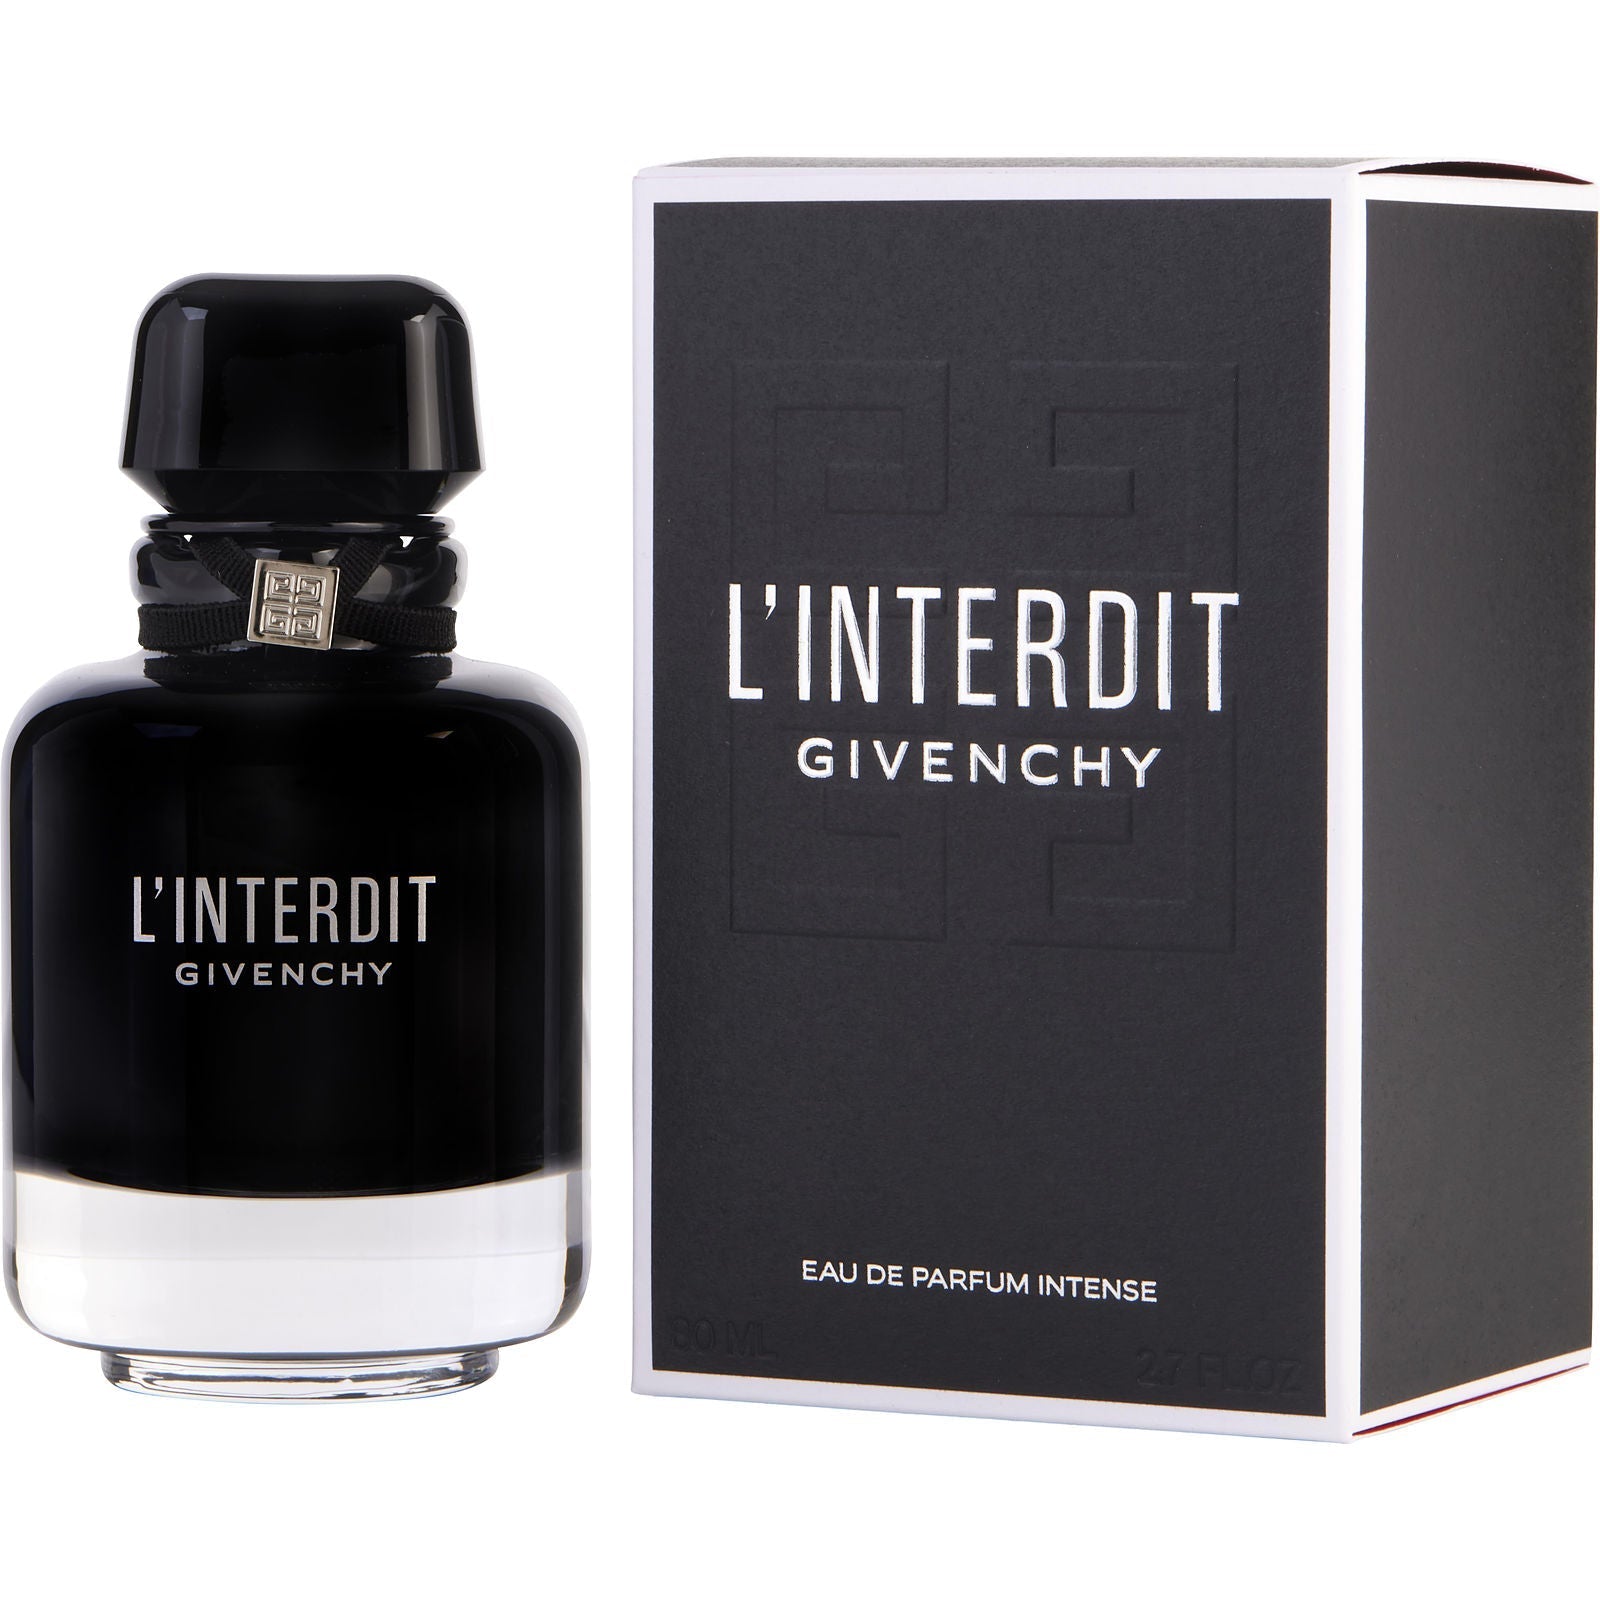 Takreem Givenchy Perfume For woman - Takreem.jo